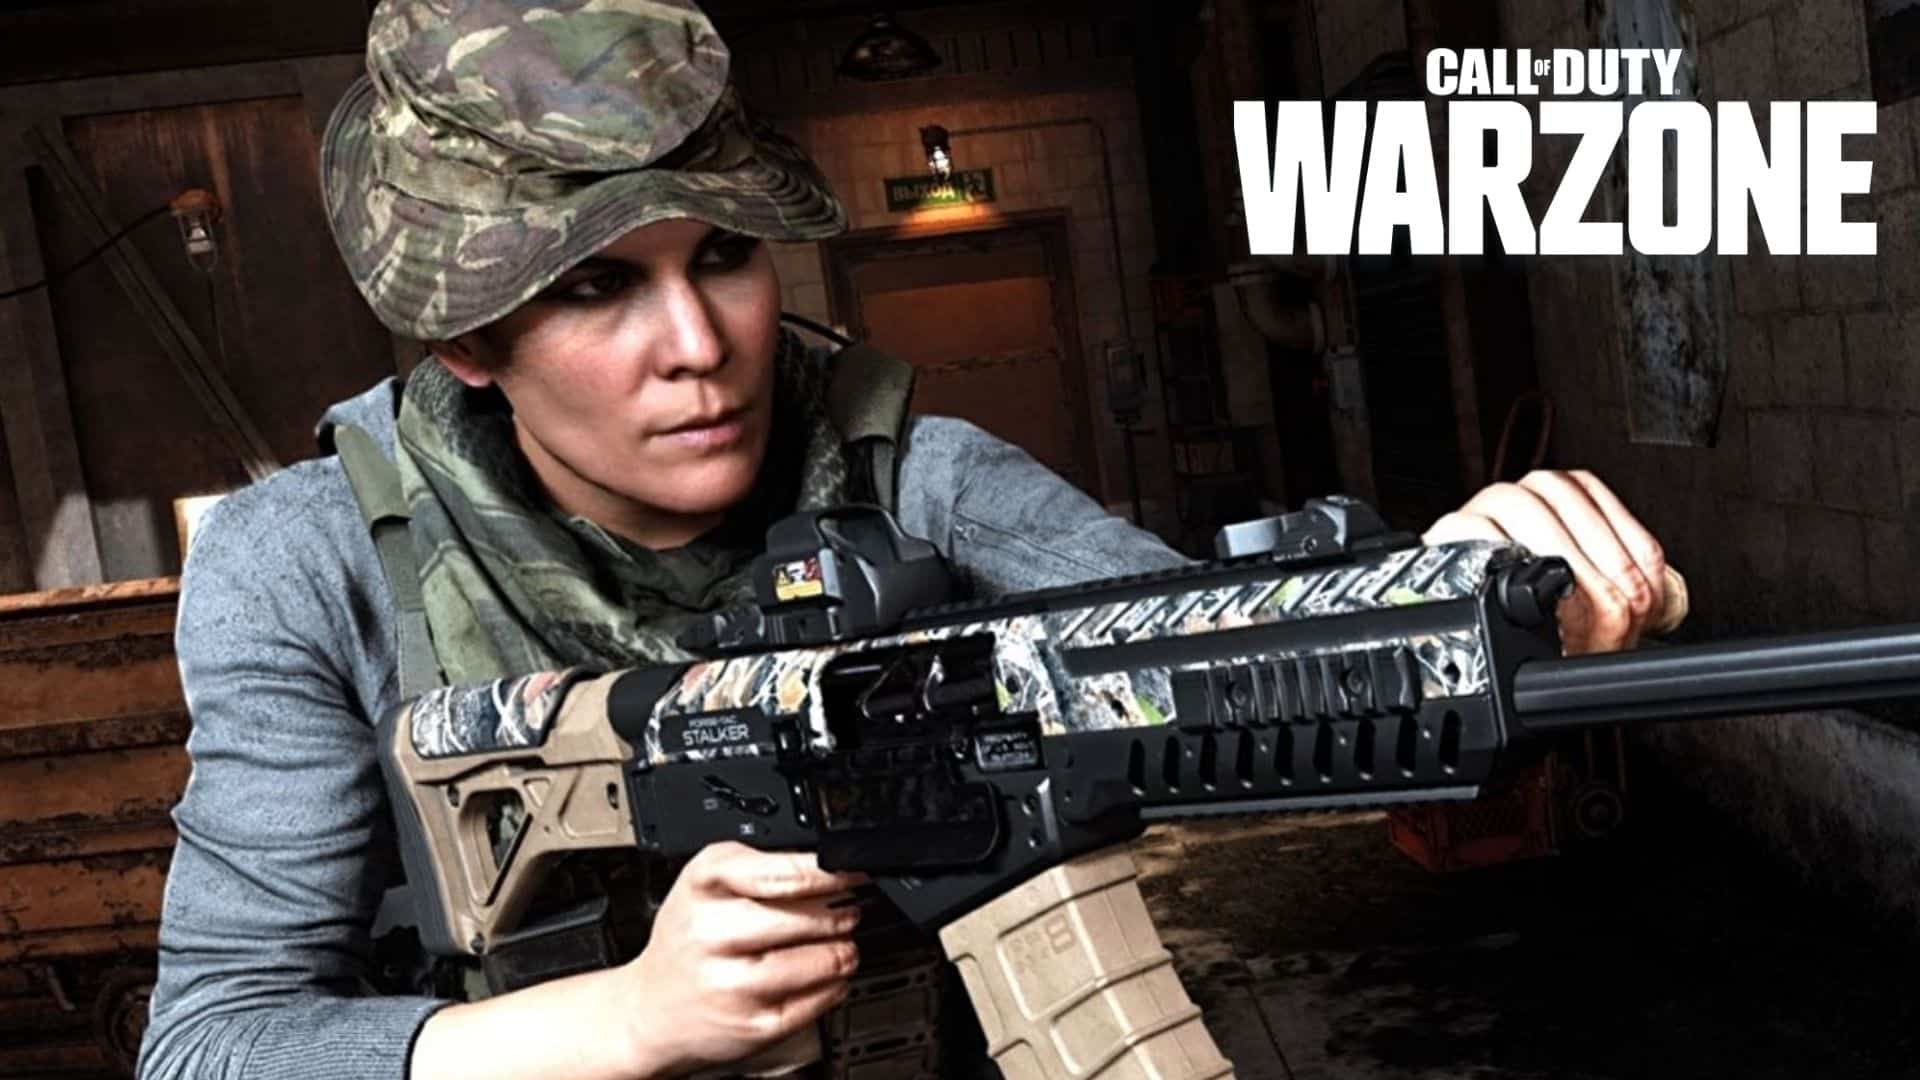 Female warzone character eyeing up shot with shotgun